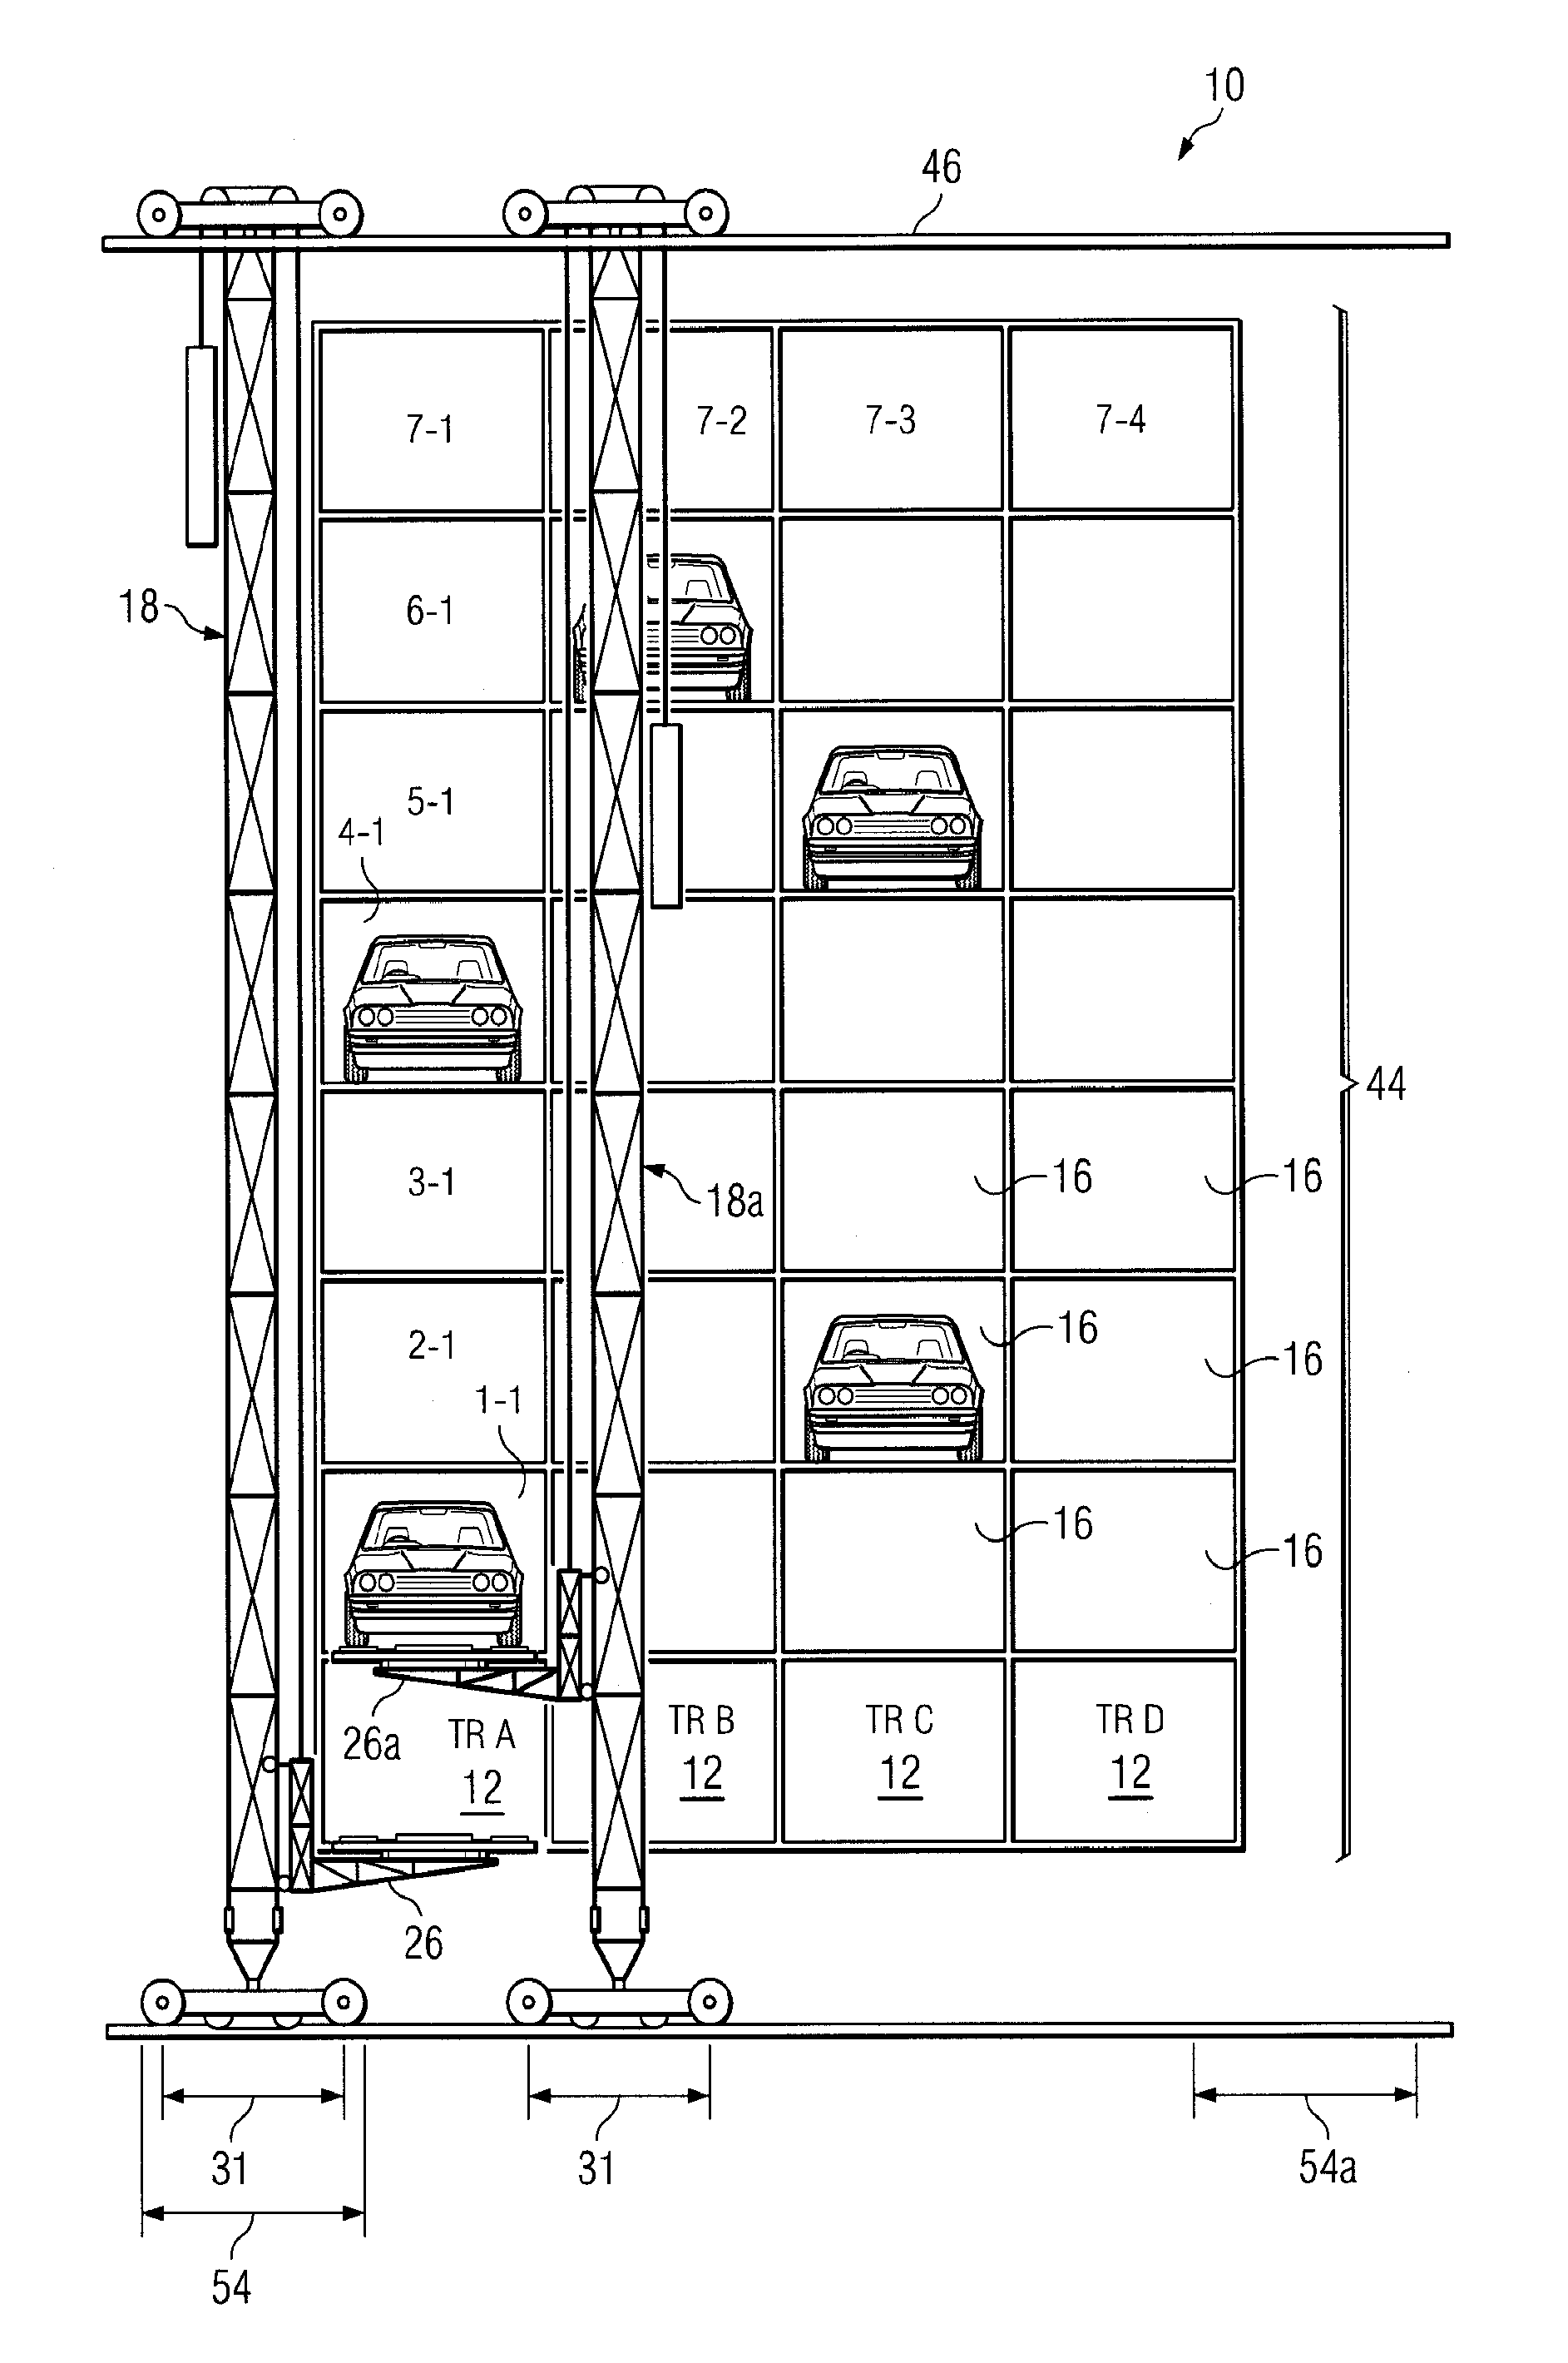 Automatic parking structure